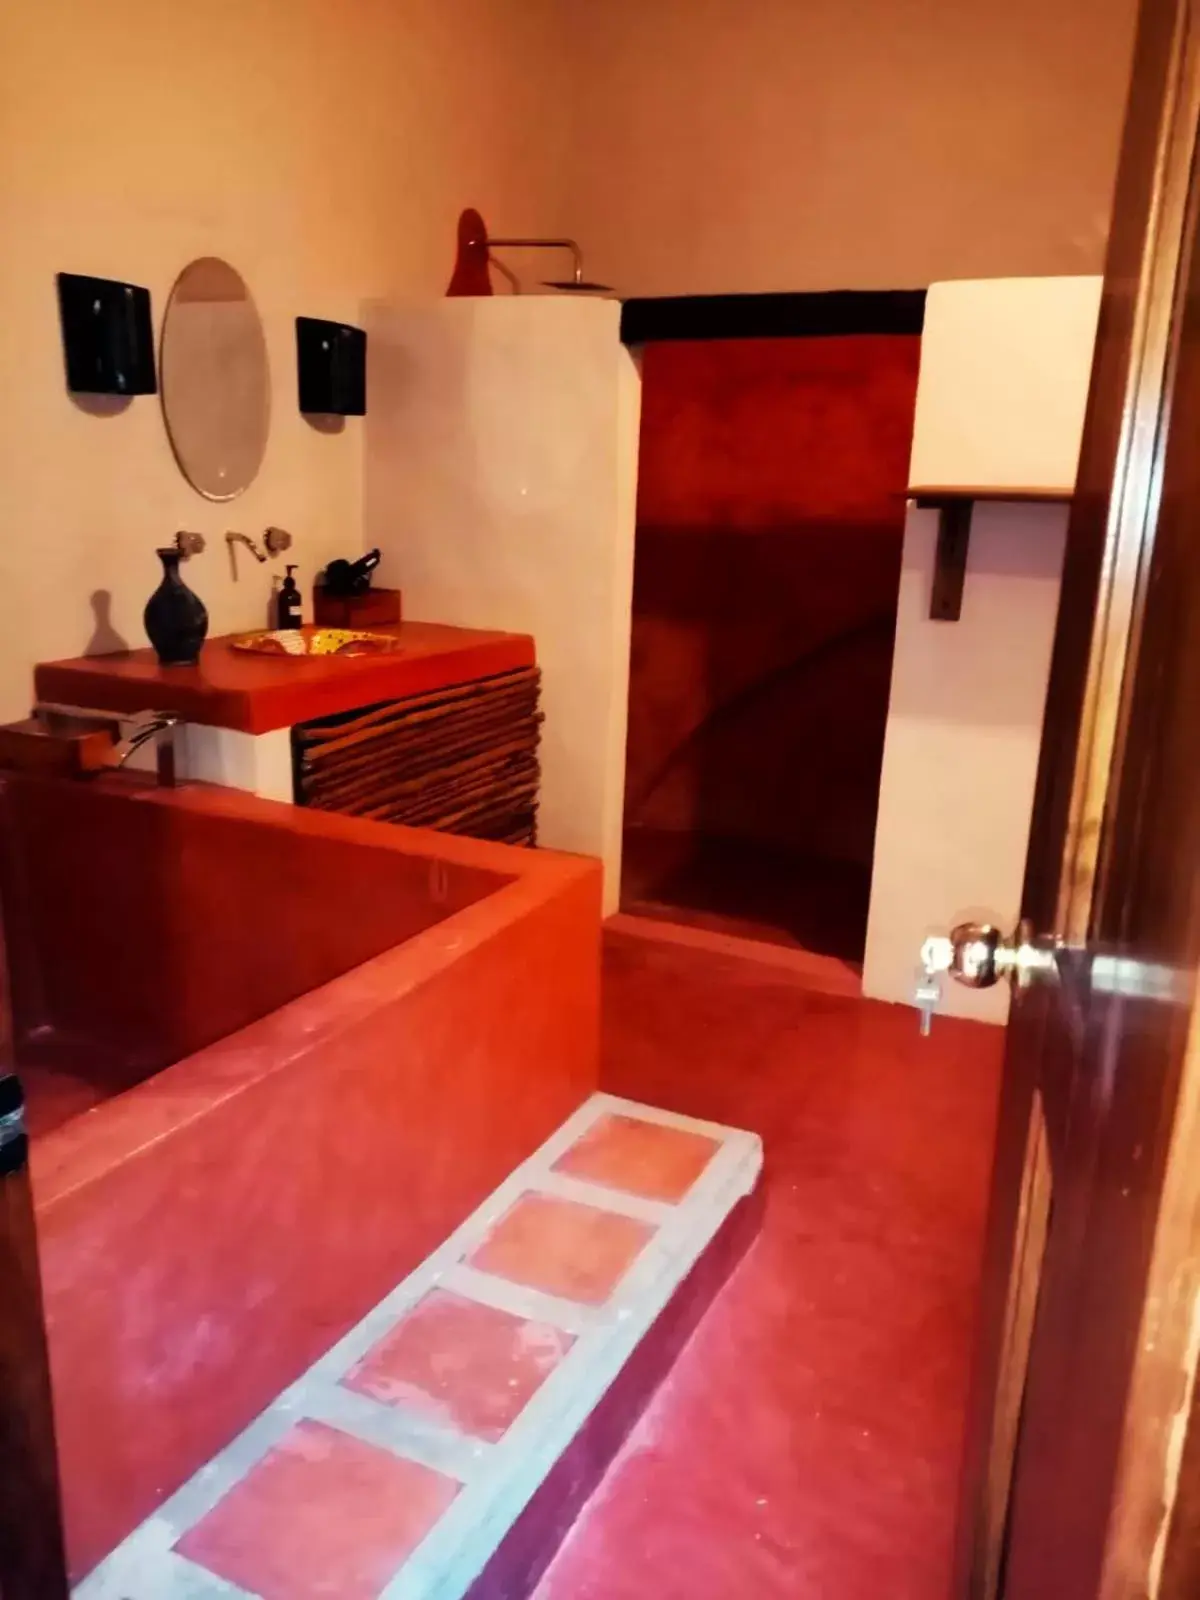 Photo of the whole room, Bathroom in Hotel Refugio41